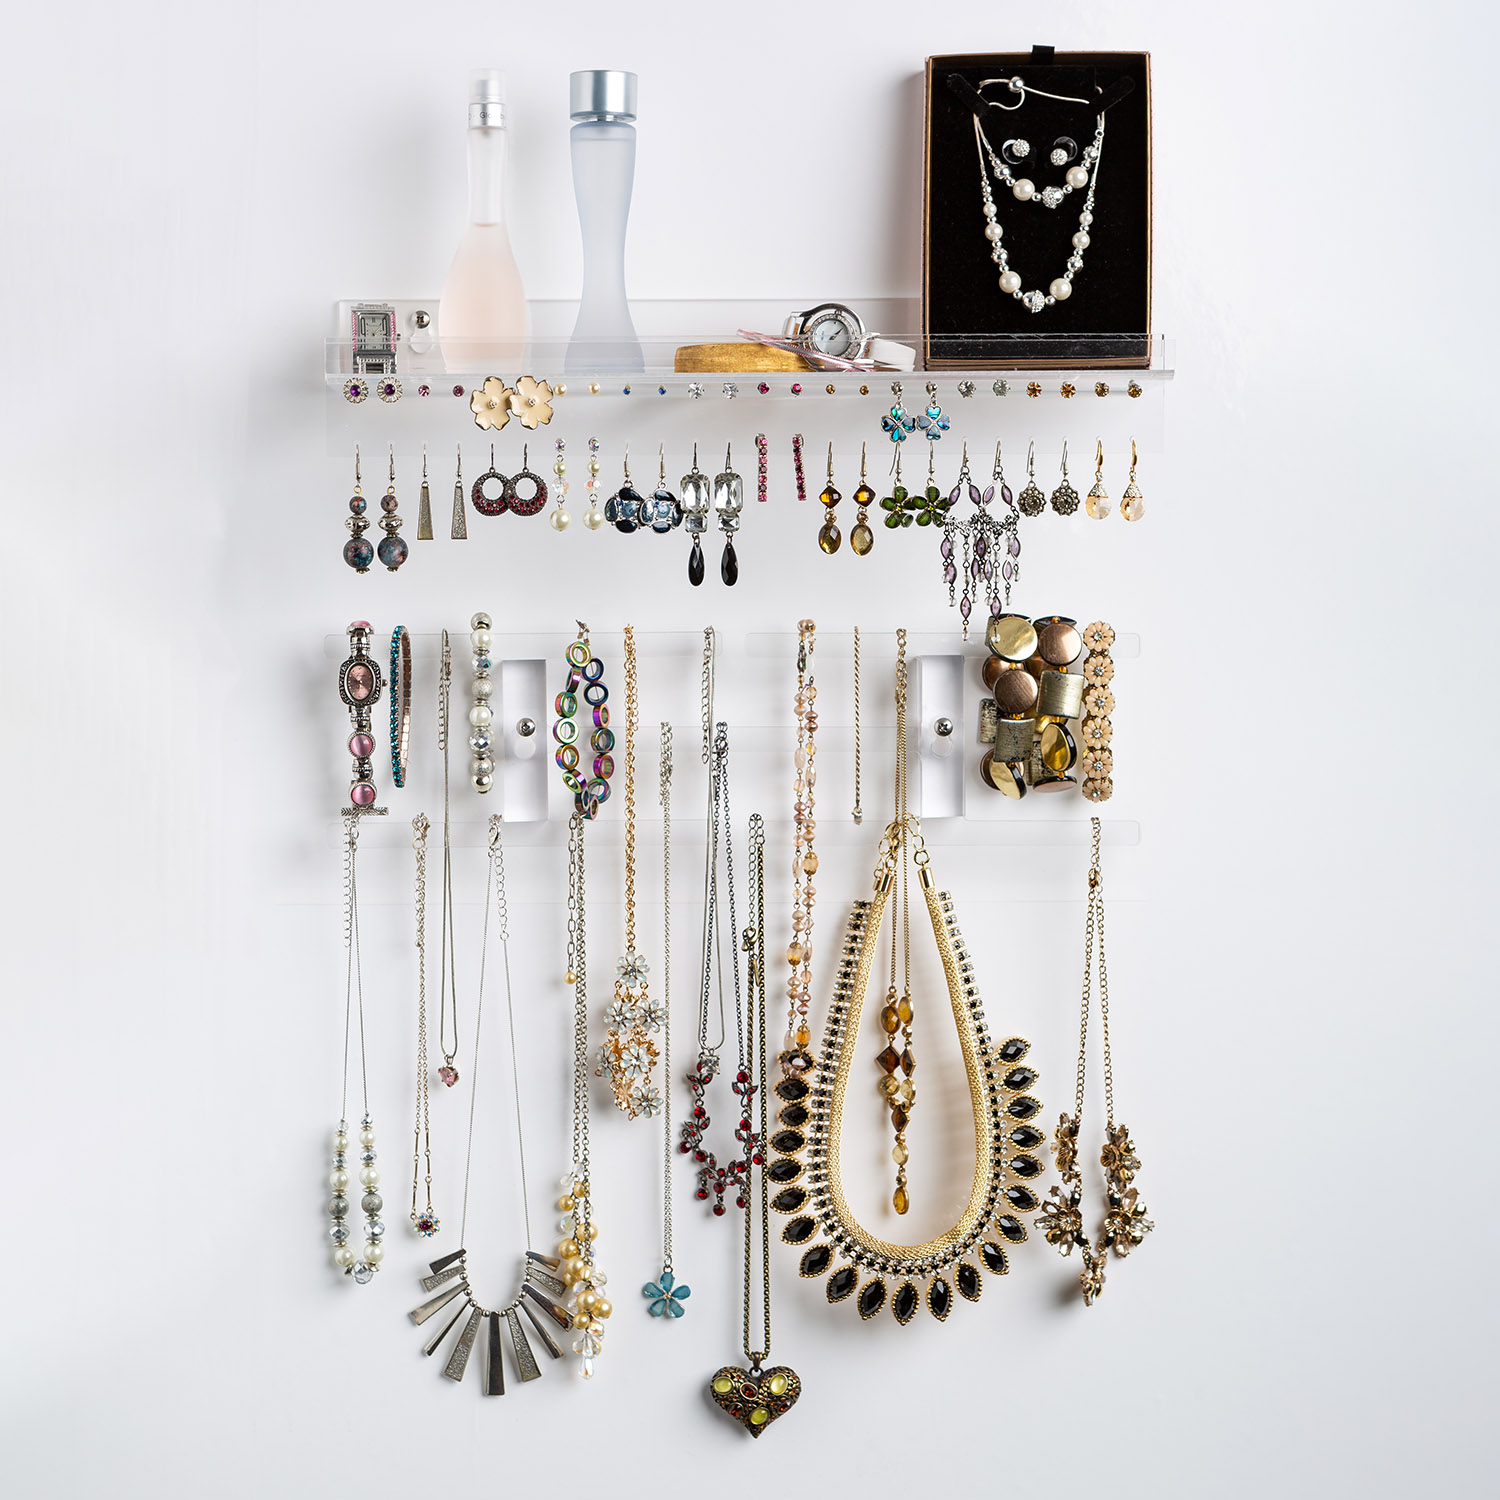 Wall Jewelry Organizer, Hanging Crystal-Clear Acrylic Jewelry